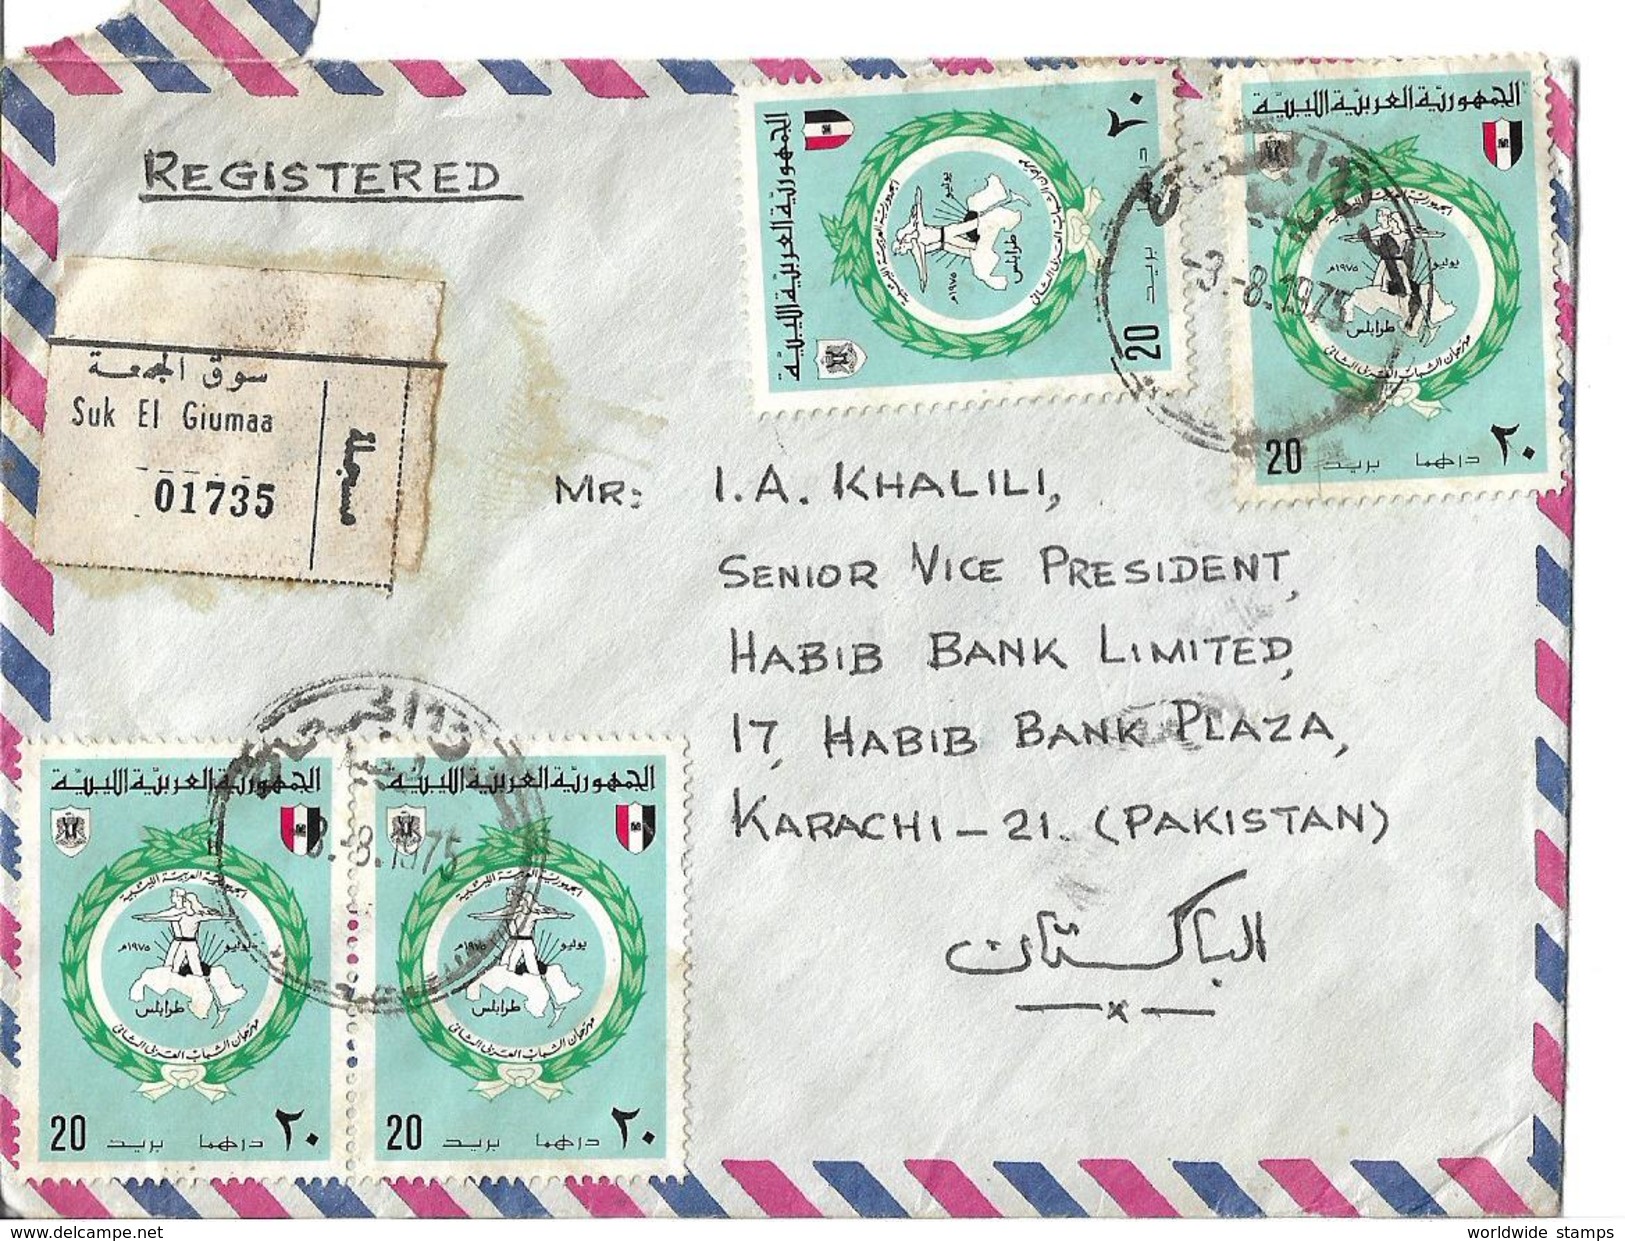 Libya Registered Airmail 1975 Emblem 20d 2nd Arab Youth Festival 8 Stamps Postal History Cover Sent To Pakistan. - Bangladesh